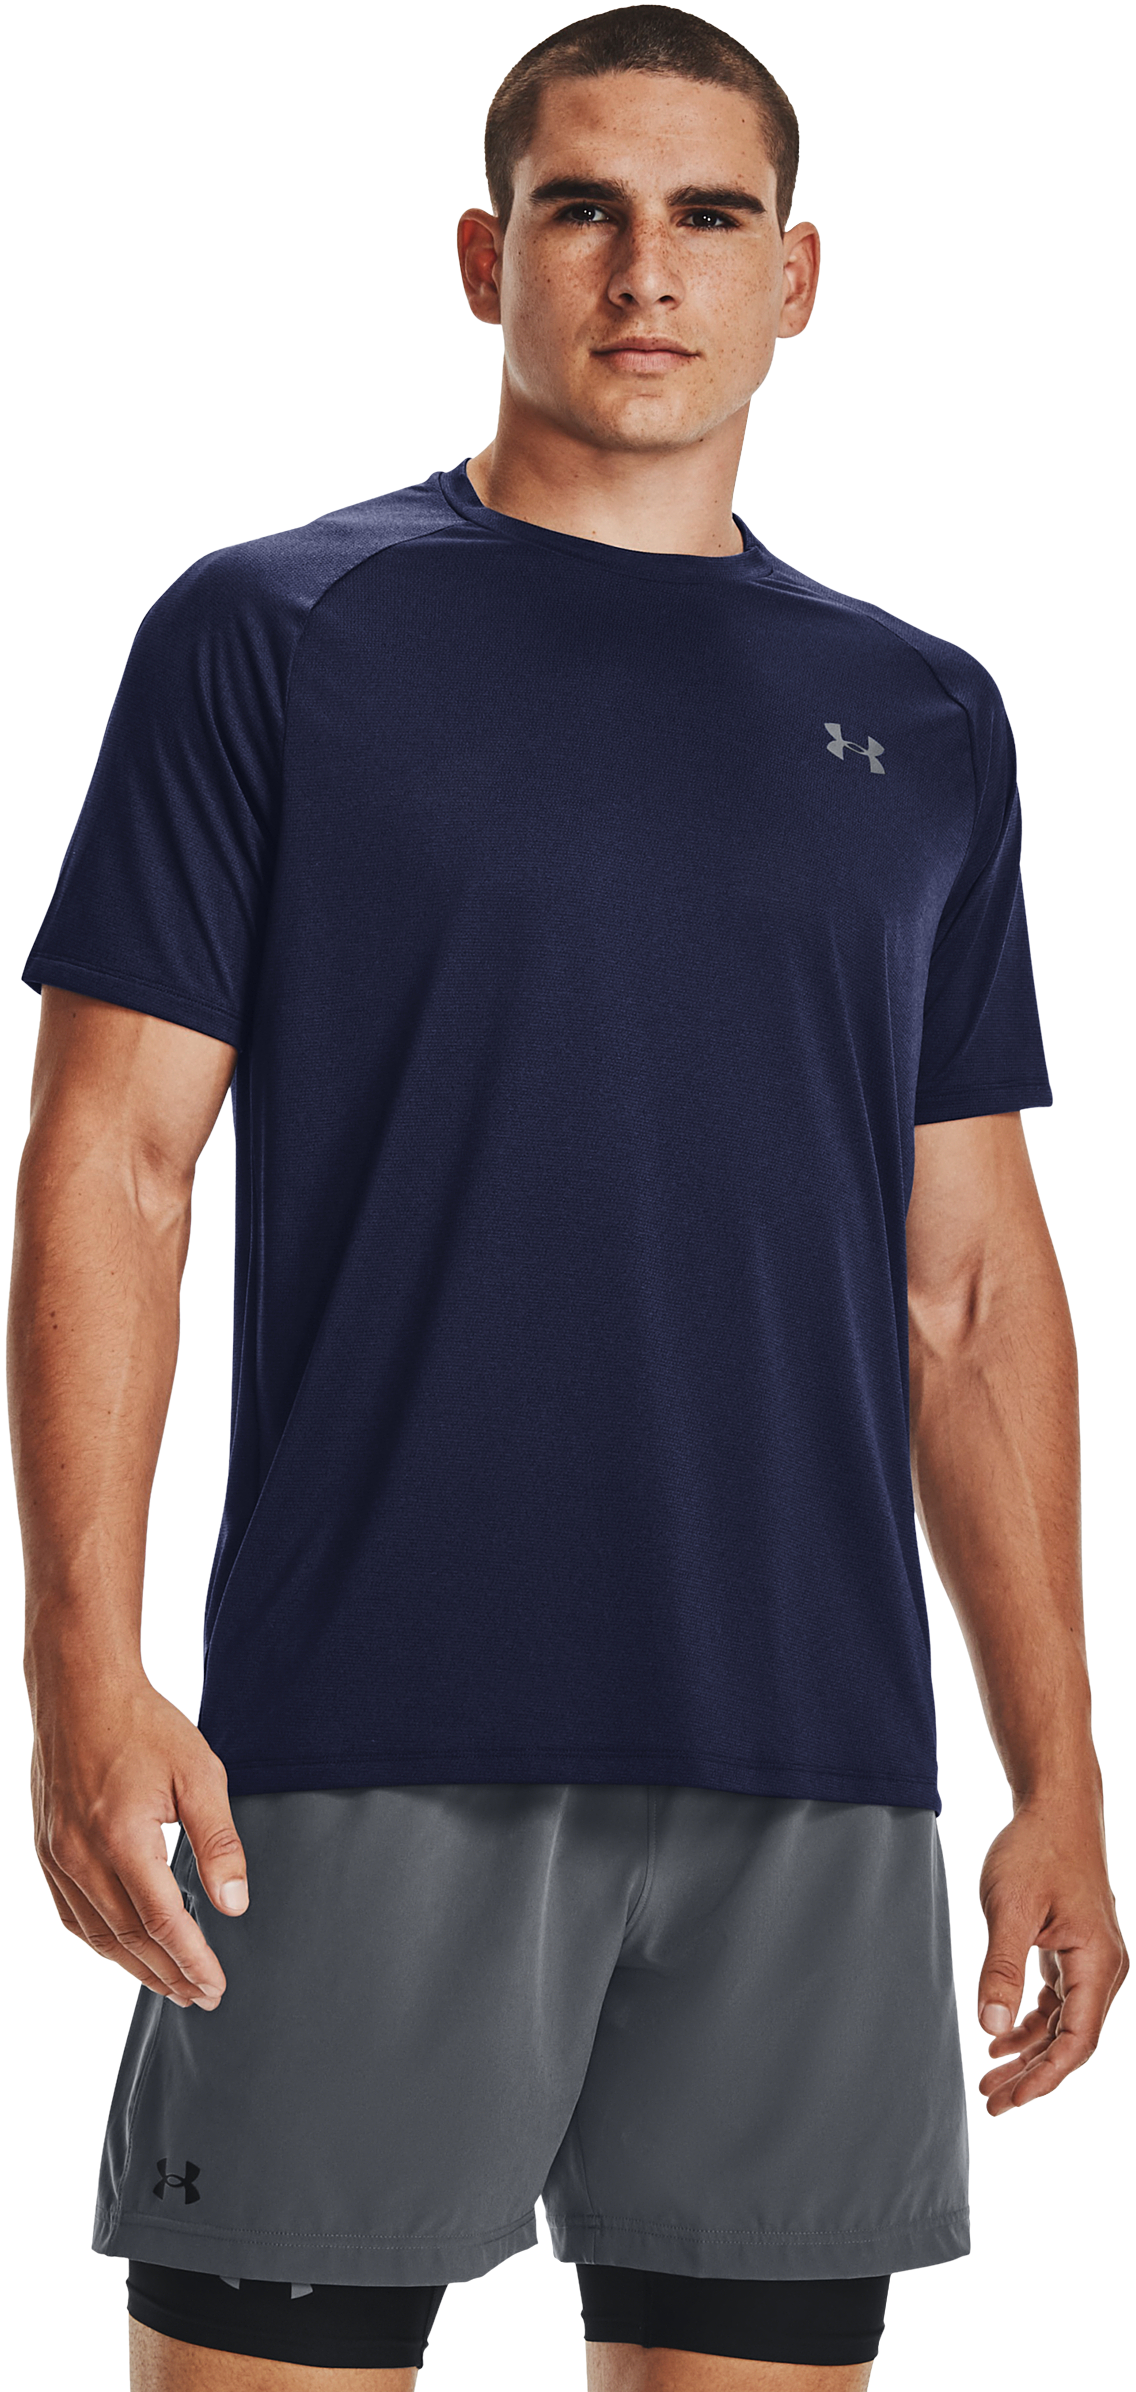 Under Armour UA Tech 2.0 Short-Sleeve T-Shirt for Men - Midnight Navy/Pitch Gray -